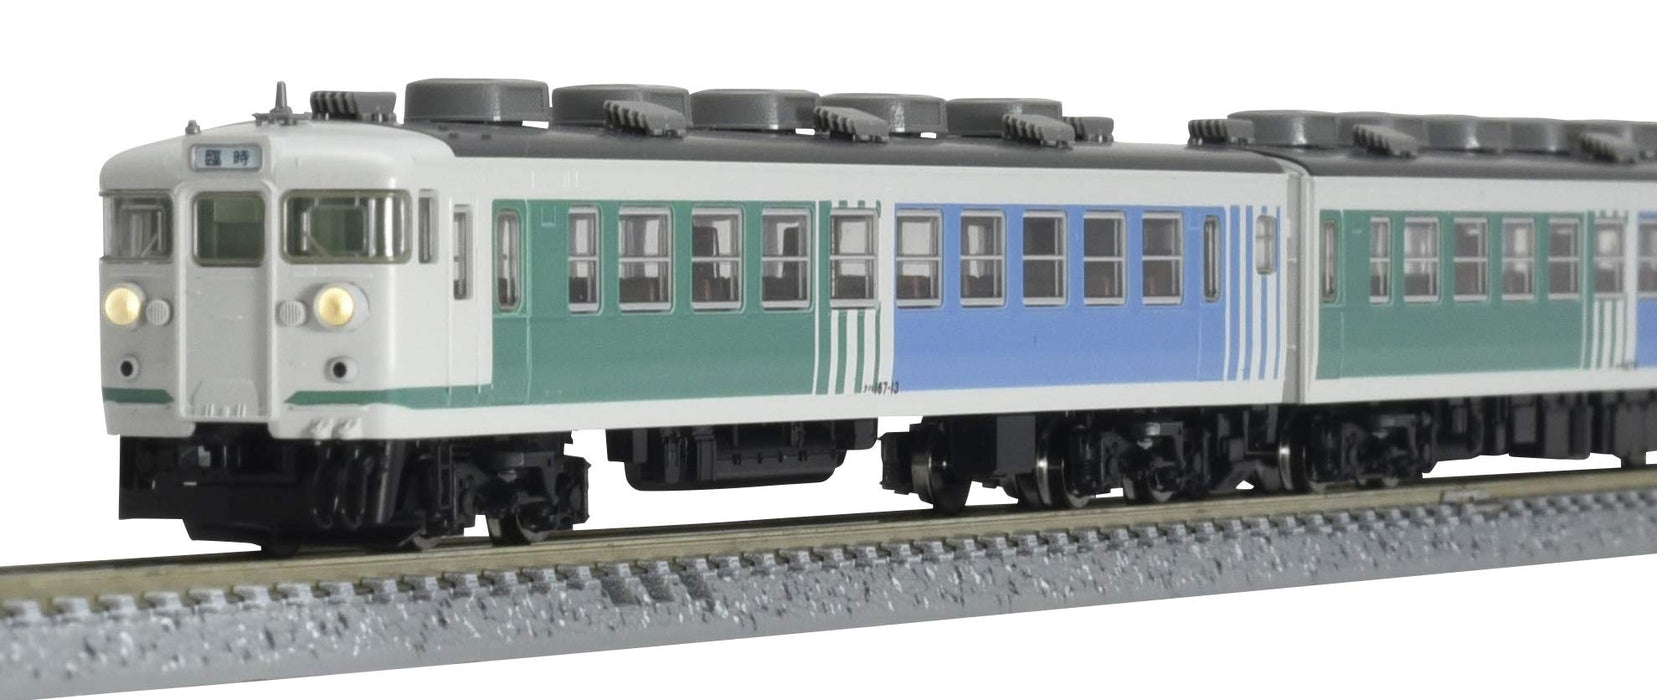 Tomytec Tomix 167 Series Fairy Tale Color 4-Car N Gauge Railway Model Train 98356